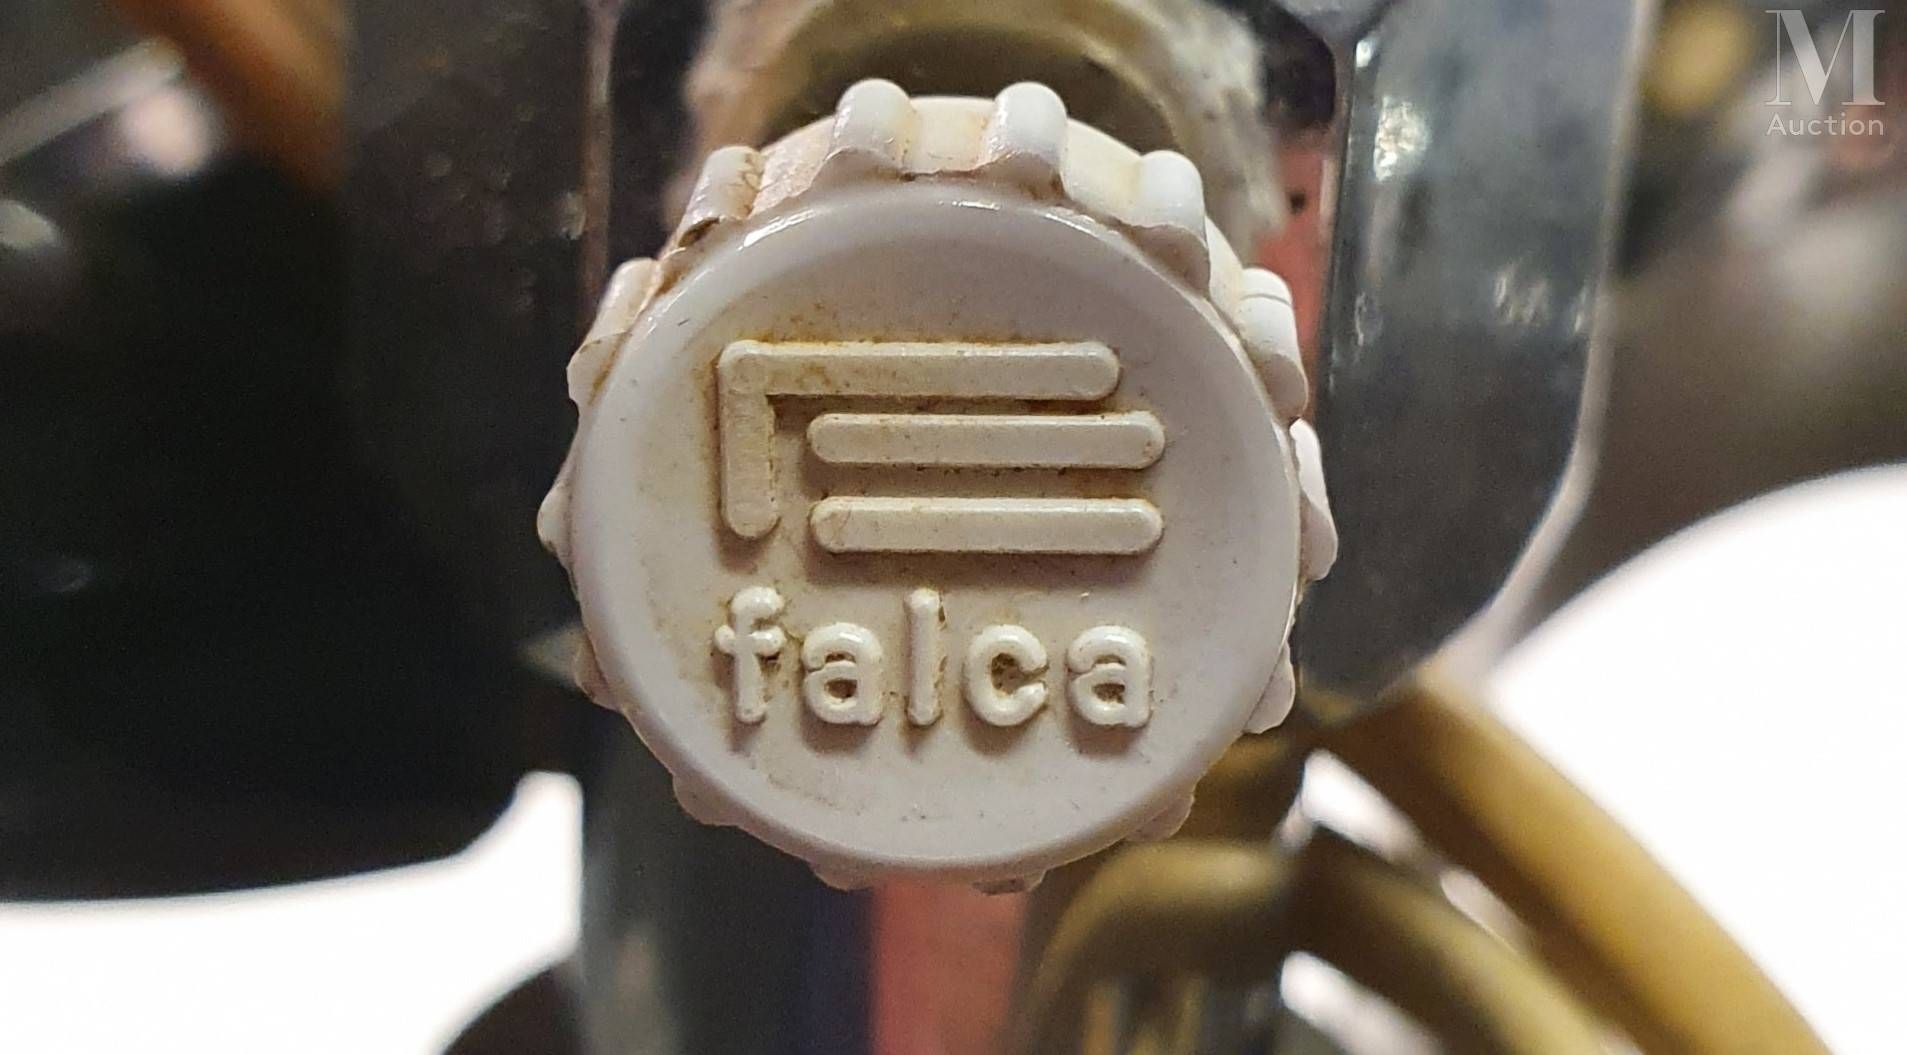 FALCA EDITION 约1970年

落地灯，有三个独立的灯，可在轴上调节高度。铸铁制的圆形底座。反射器和轴为镀铬金属。

每个调节旋钮上都有出版商的标记&hellip;